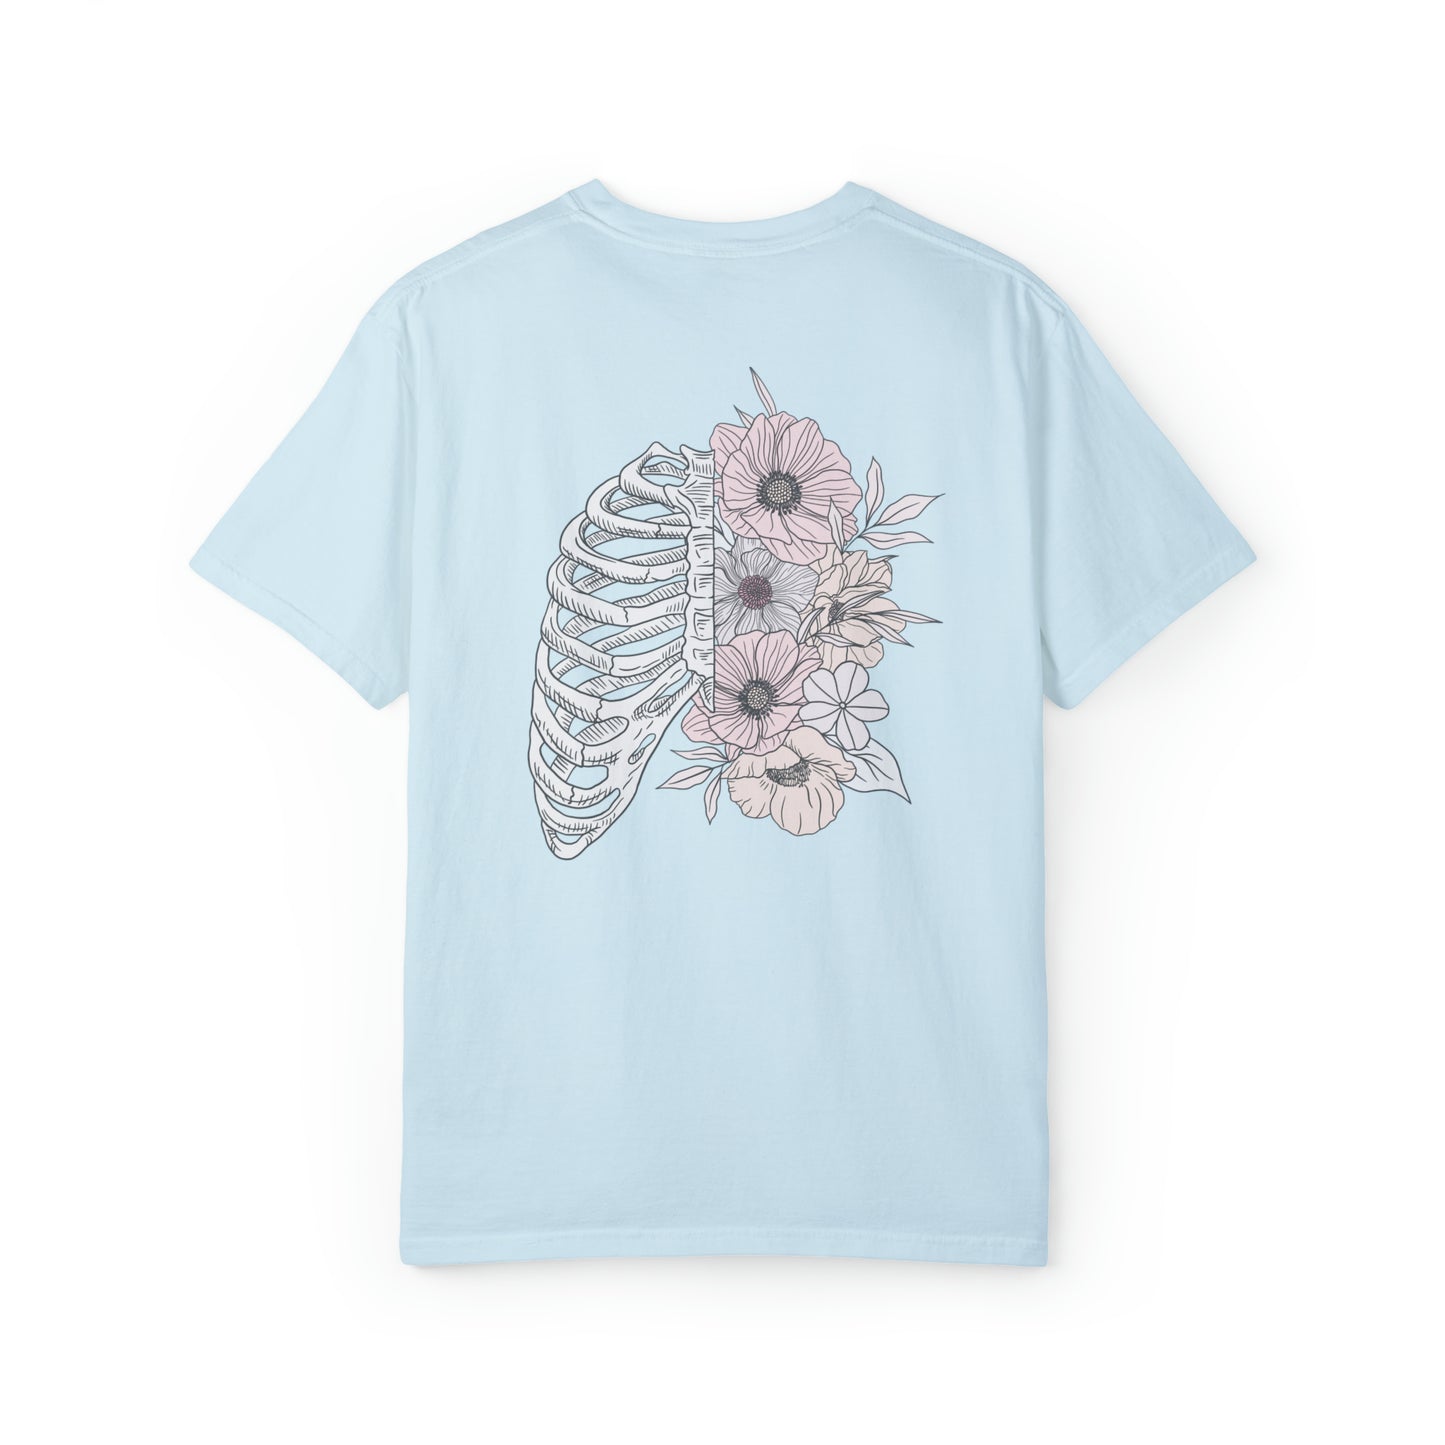 Rock and Roll T-Shirt, Flower Floral Print Shirt, Lung Pulmonary Breathing Shirt, Nurse Doctor Shirt, Gift for Nurse or Doctor, Pretty Cute Nurse Shirt